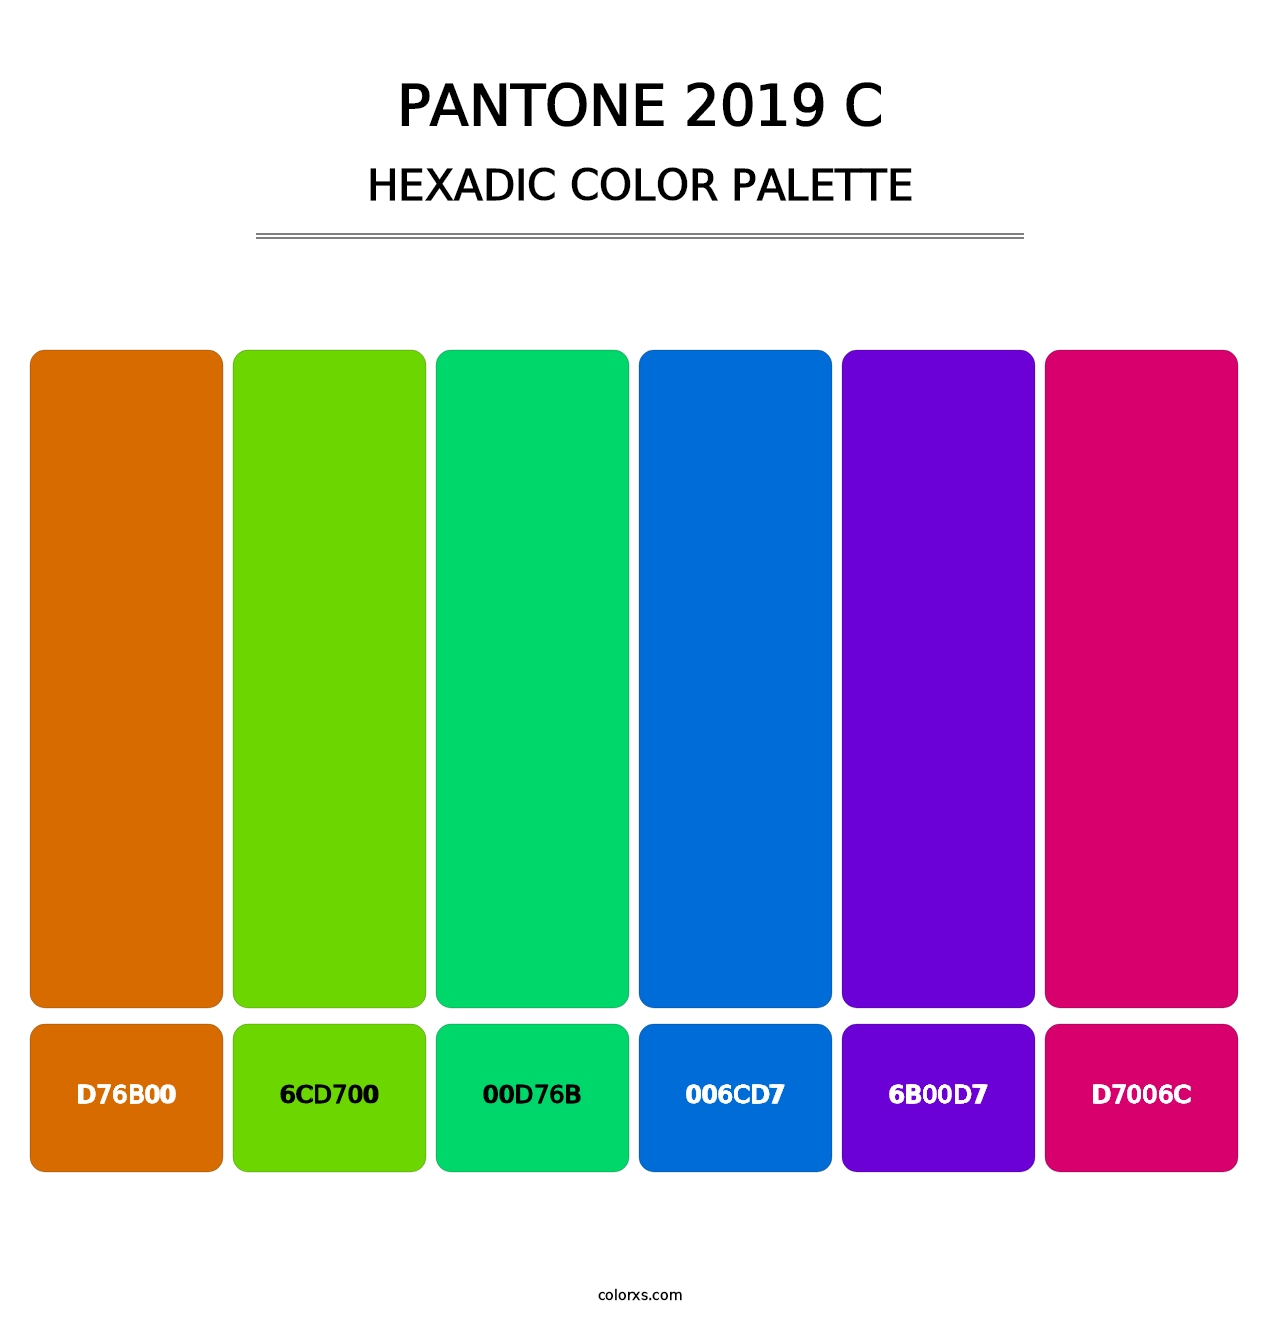 PANTONE 2019 C - Hexadic Color Palette